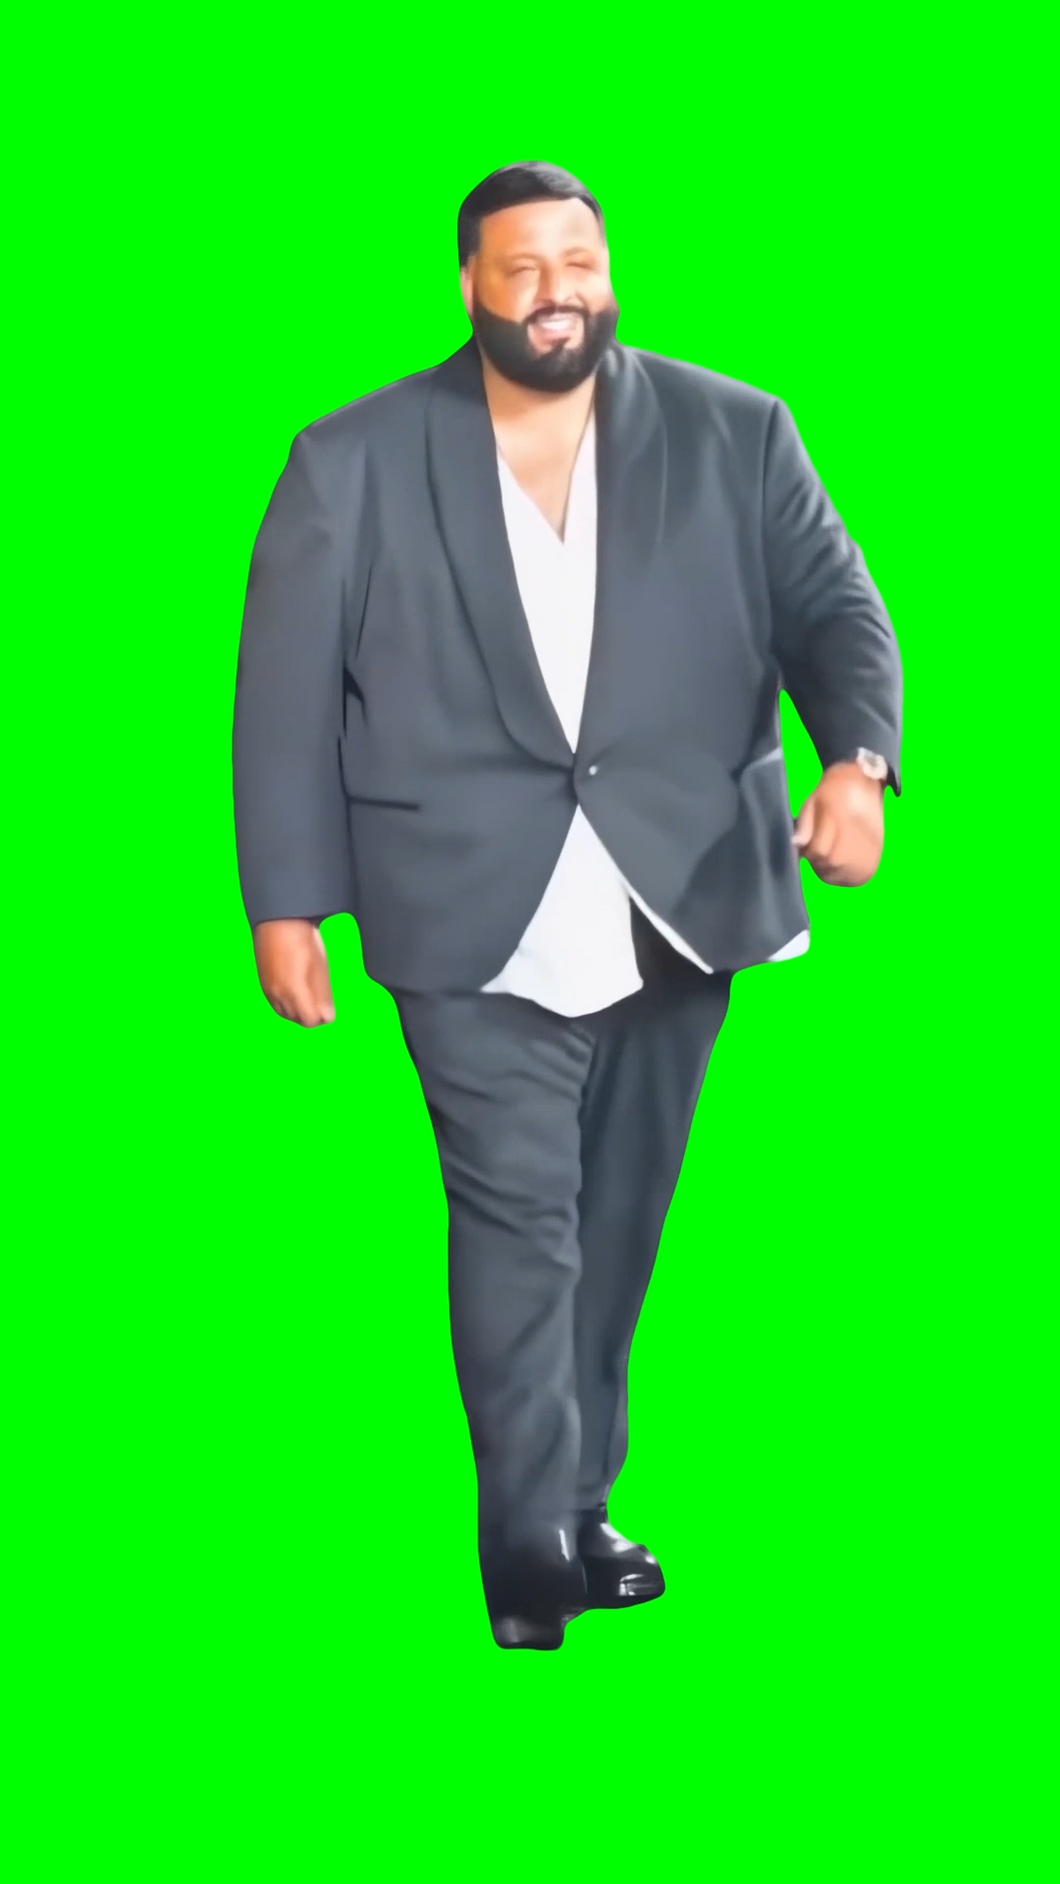 DJ Khaled walking like a model on a Hugo Boss fashion show runway (Green Screen)